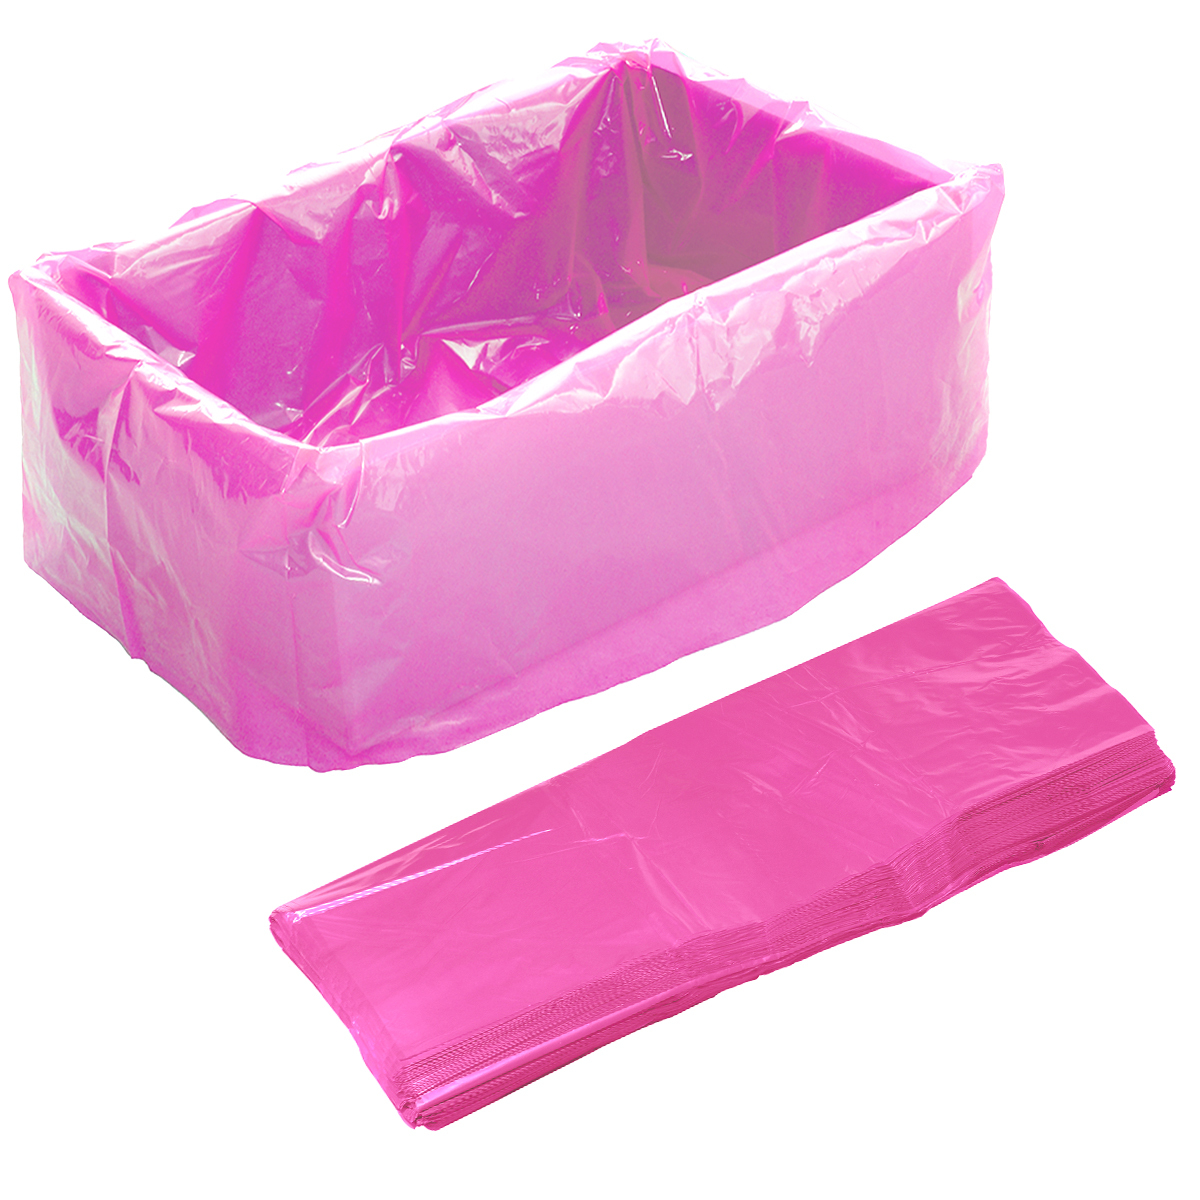 Carton Liner, 635+ 380 x 635mm x 18um (Flat-Packed) - Pink